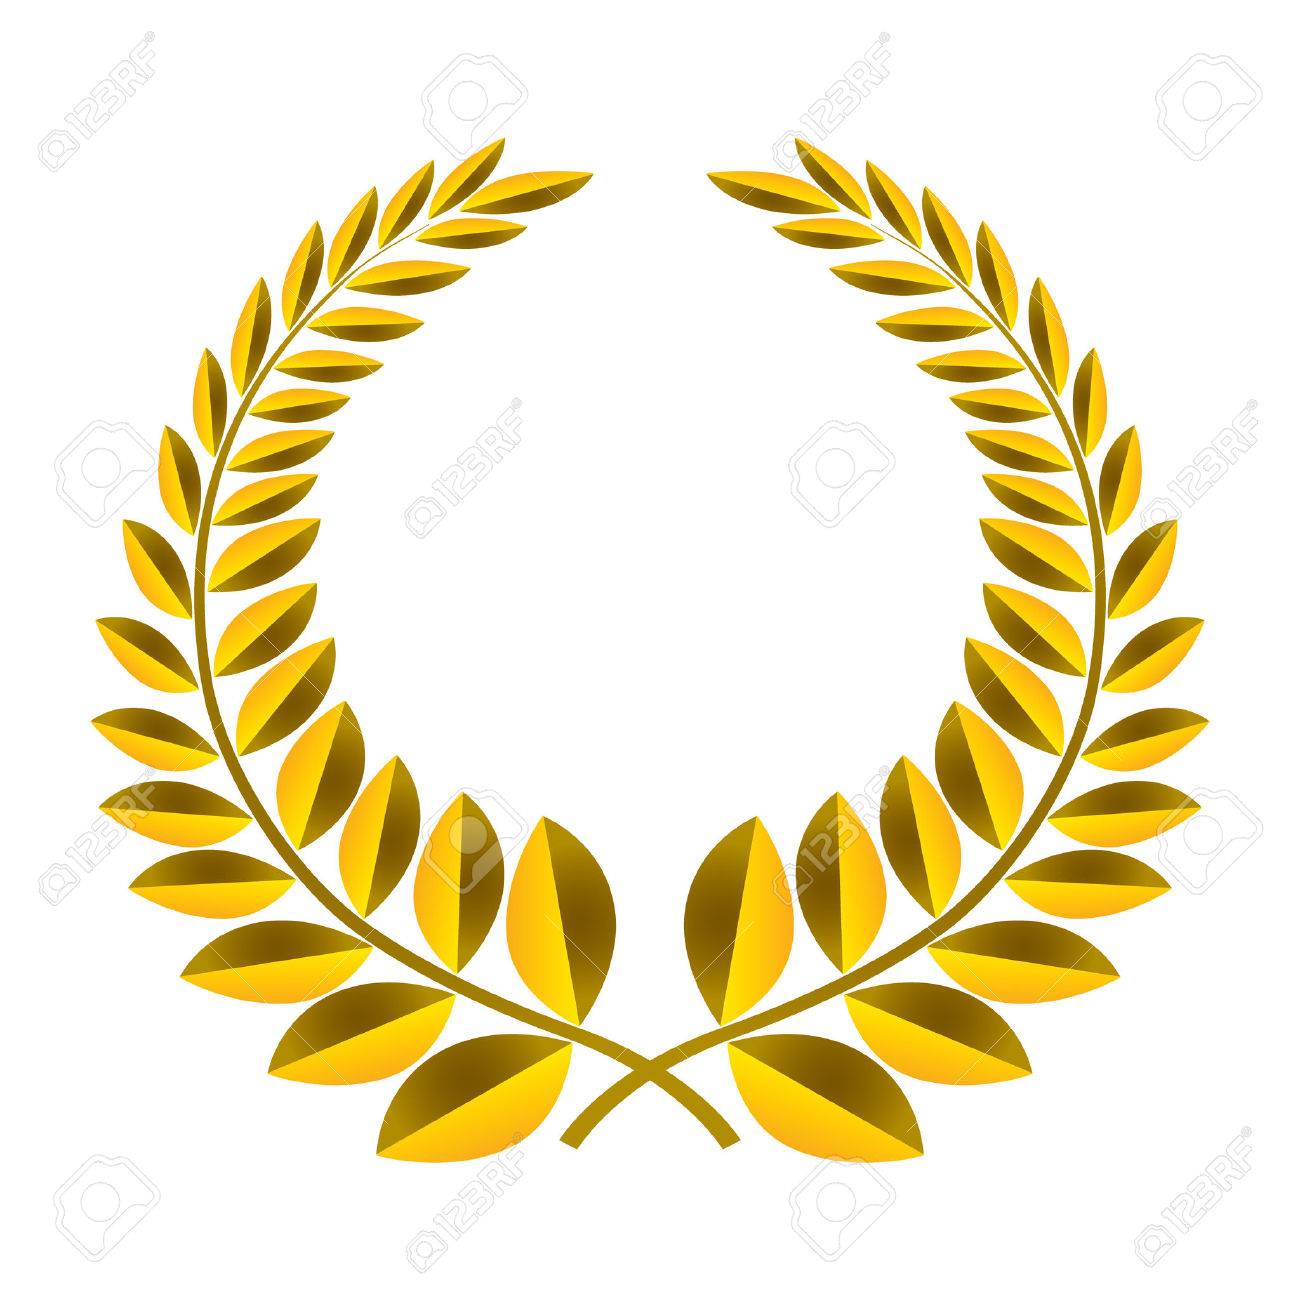 A laurel wreath - symbol of victory and achievement. design eps 